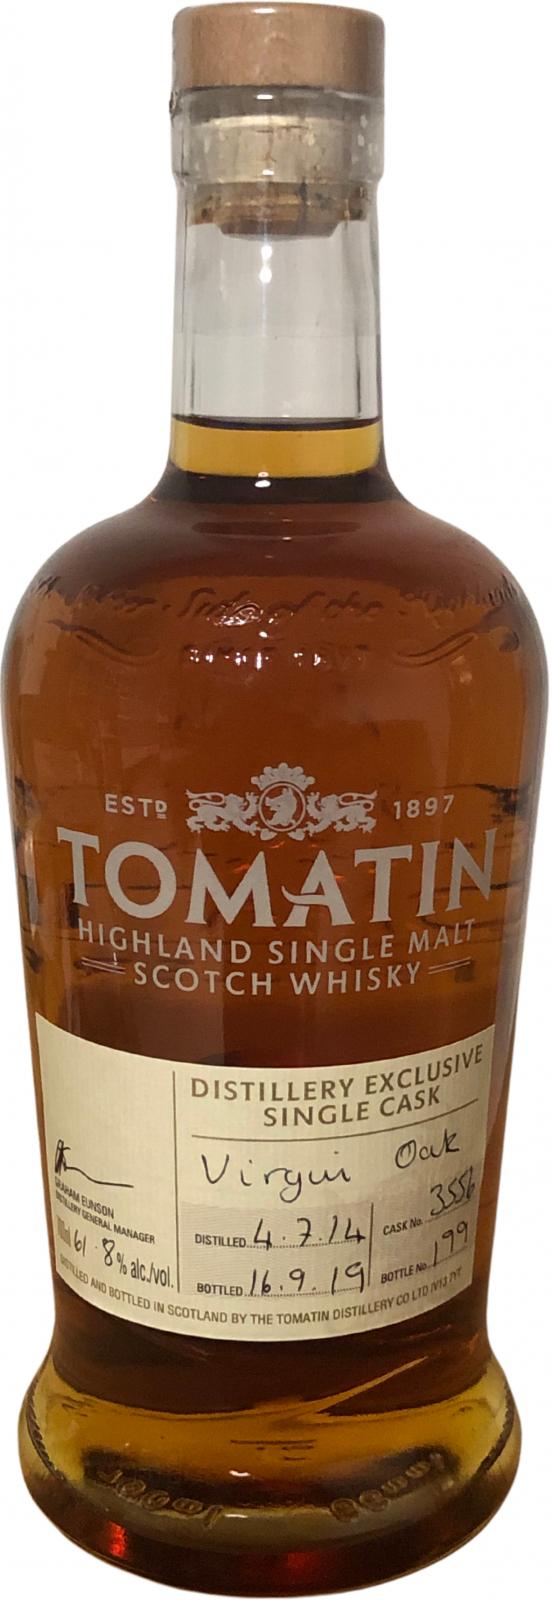 Tomatin 2014 Virgin Oak #3556 61.8% 700ml